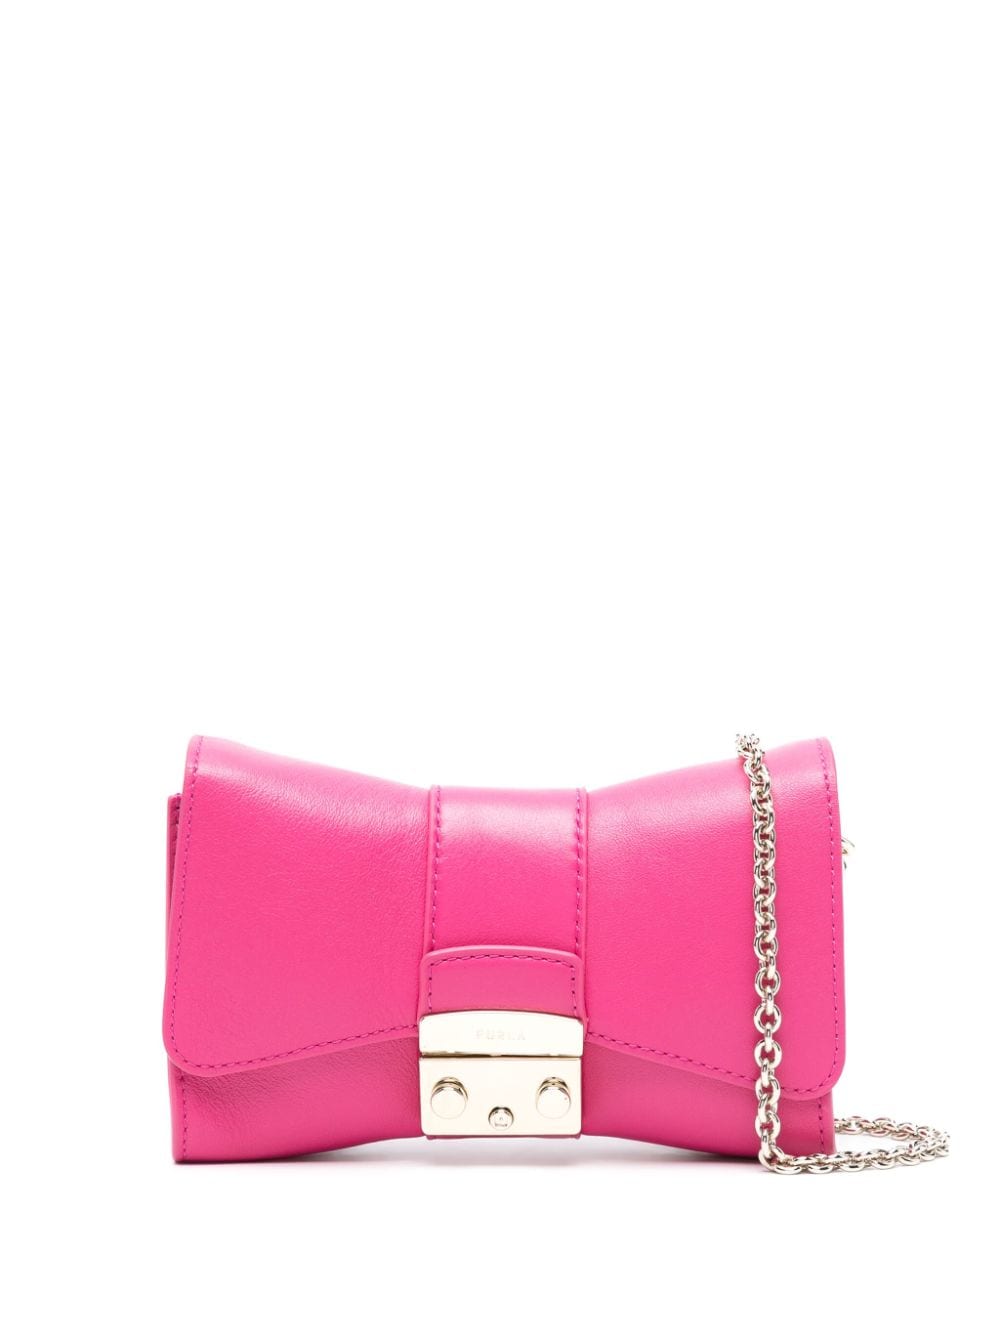 Furla Metropolis Leather Crossbody Bag In Pink